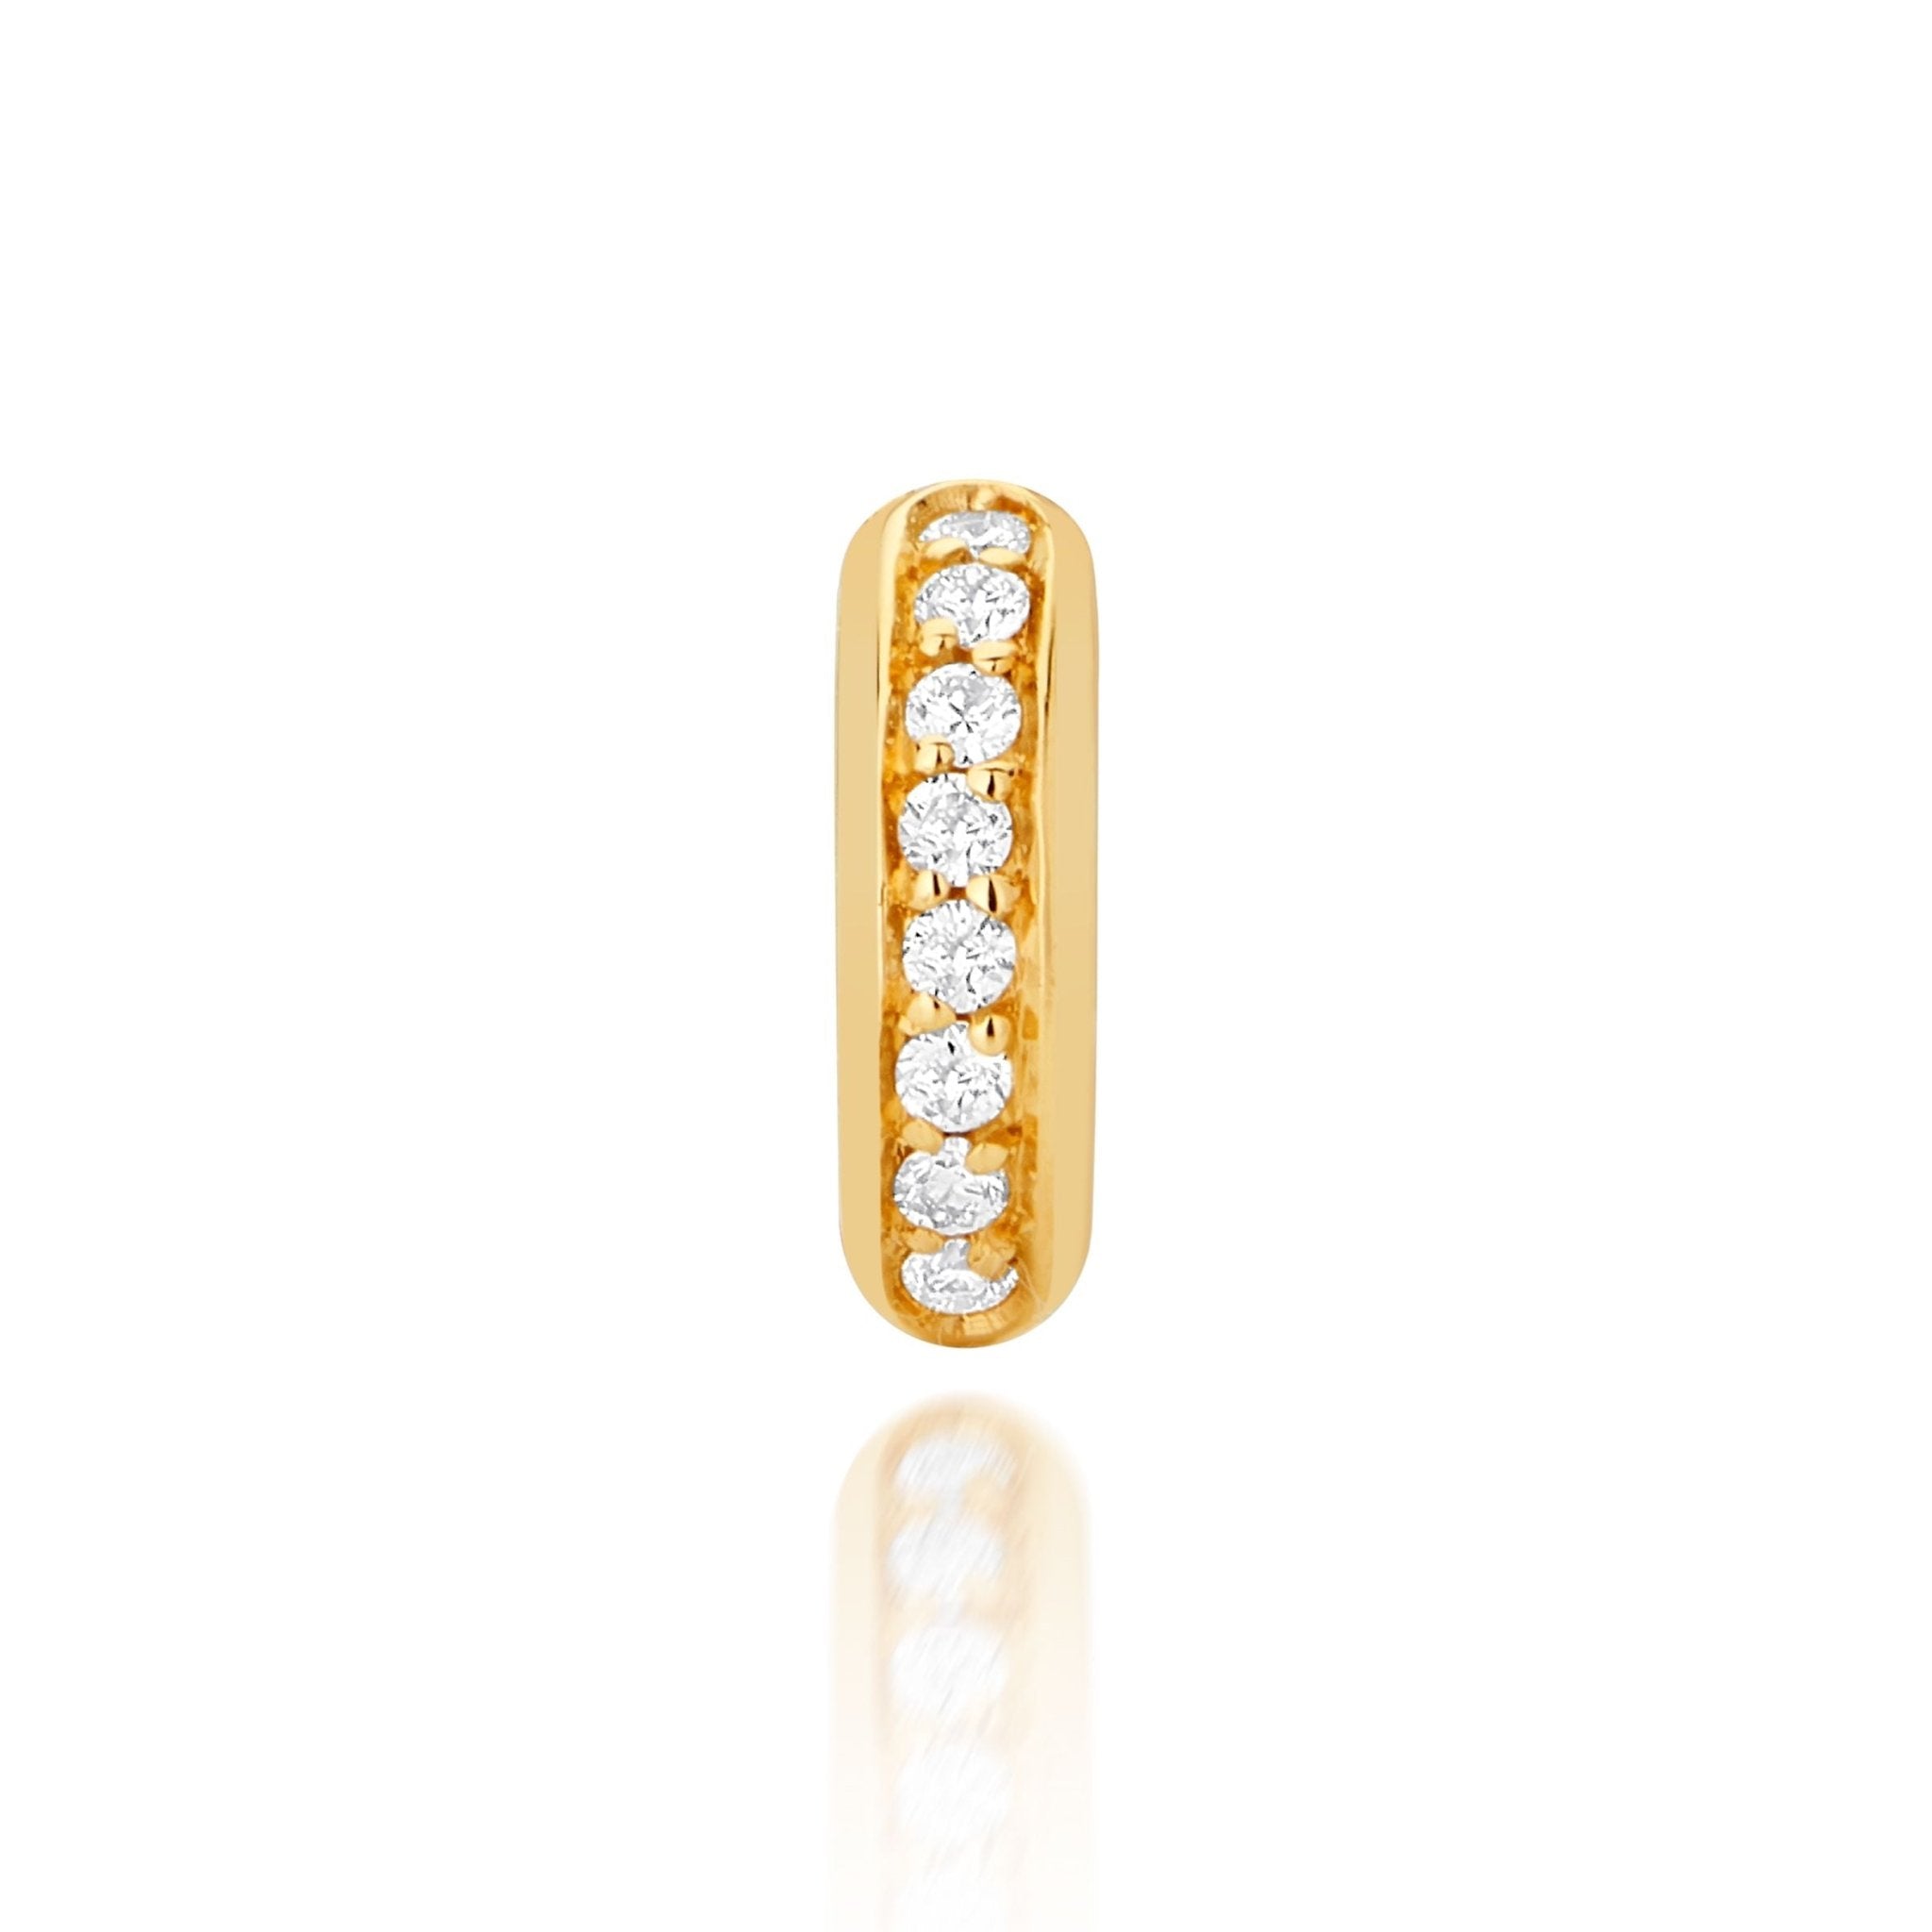 Piercing Clássico De Ouro Amarelo 18K E Diamante - Jack Vartanian - Pino